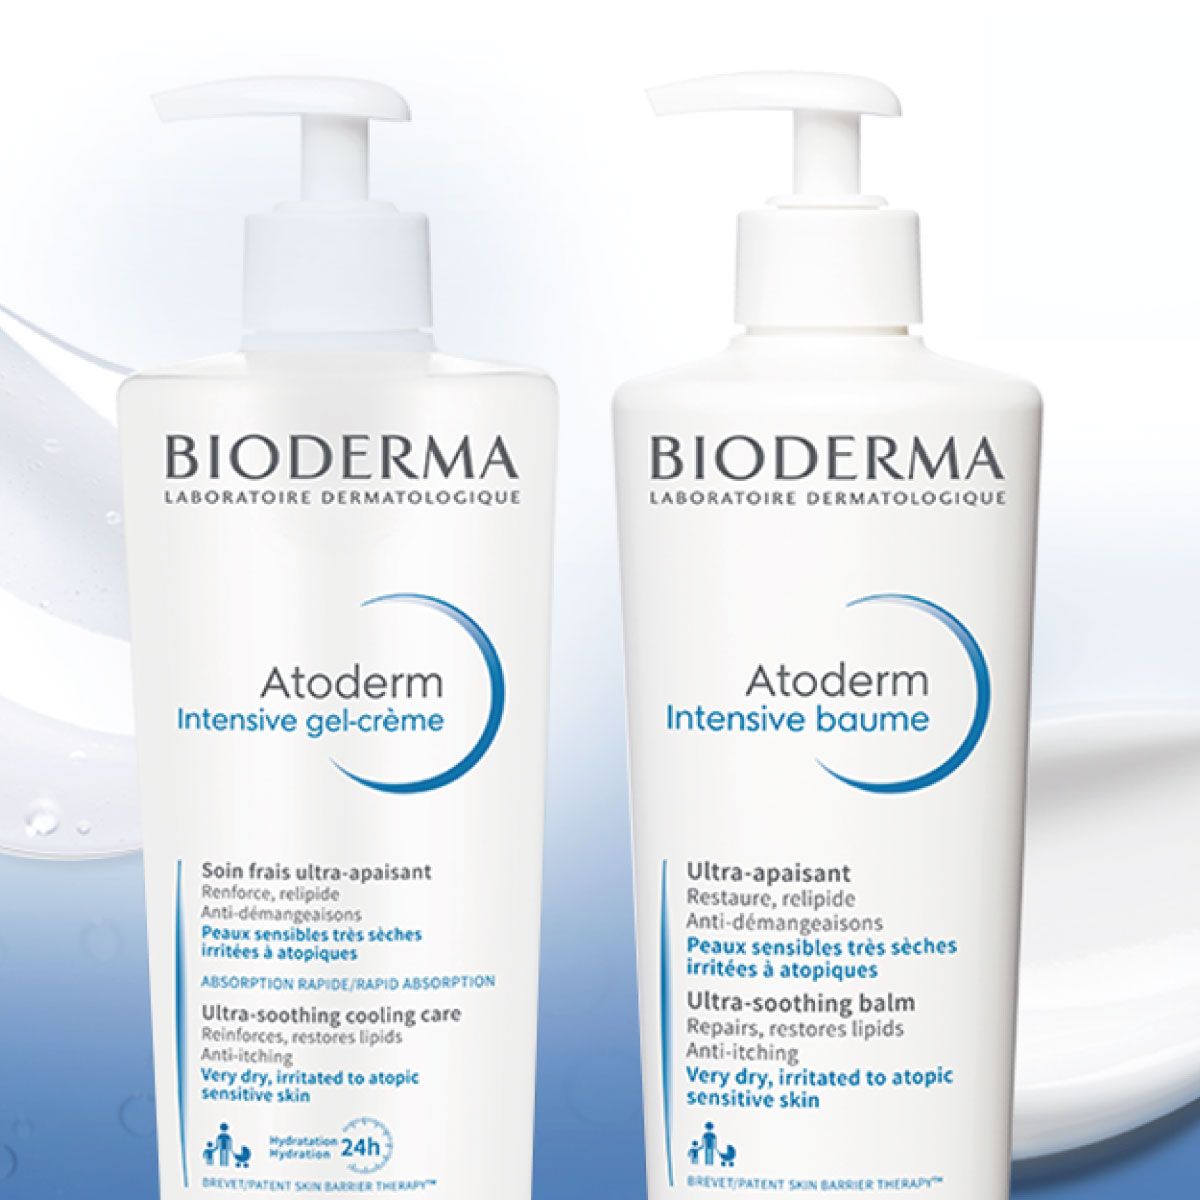 Pharmacie-Lafayette-Blog-Bioderma-ATODERM-Intensive-Baume-min